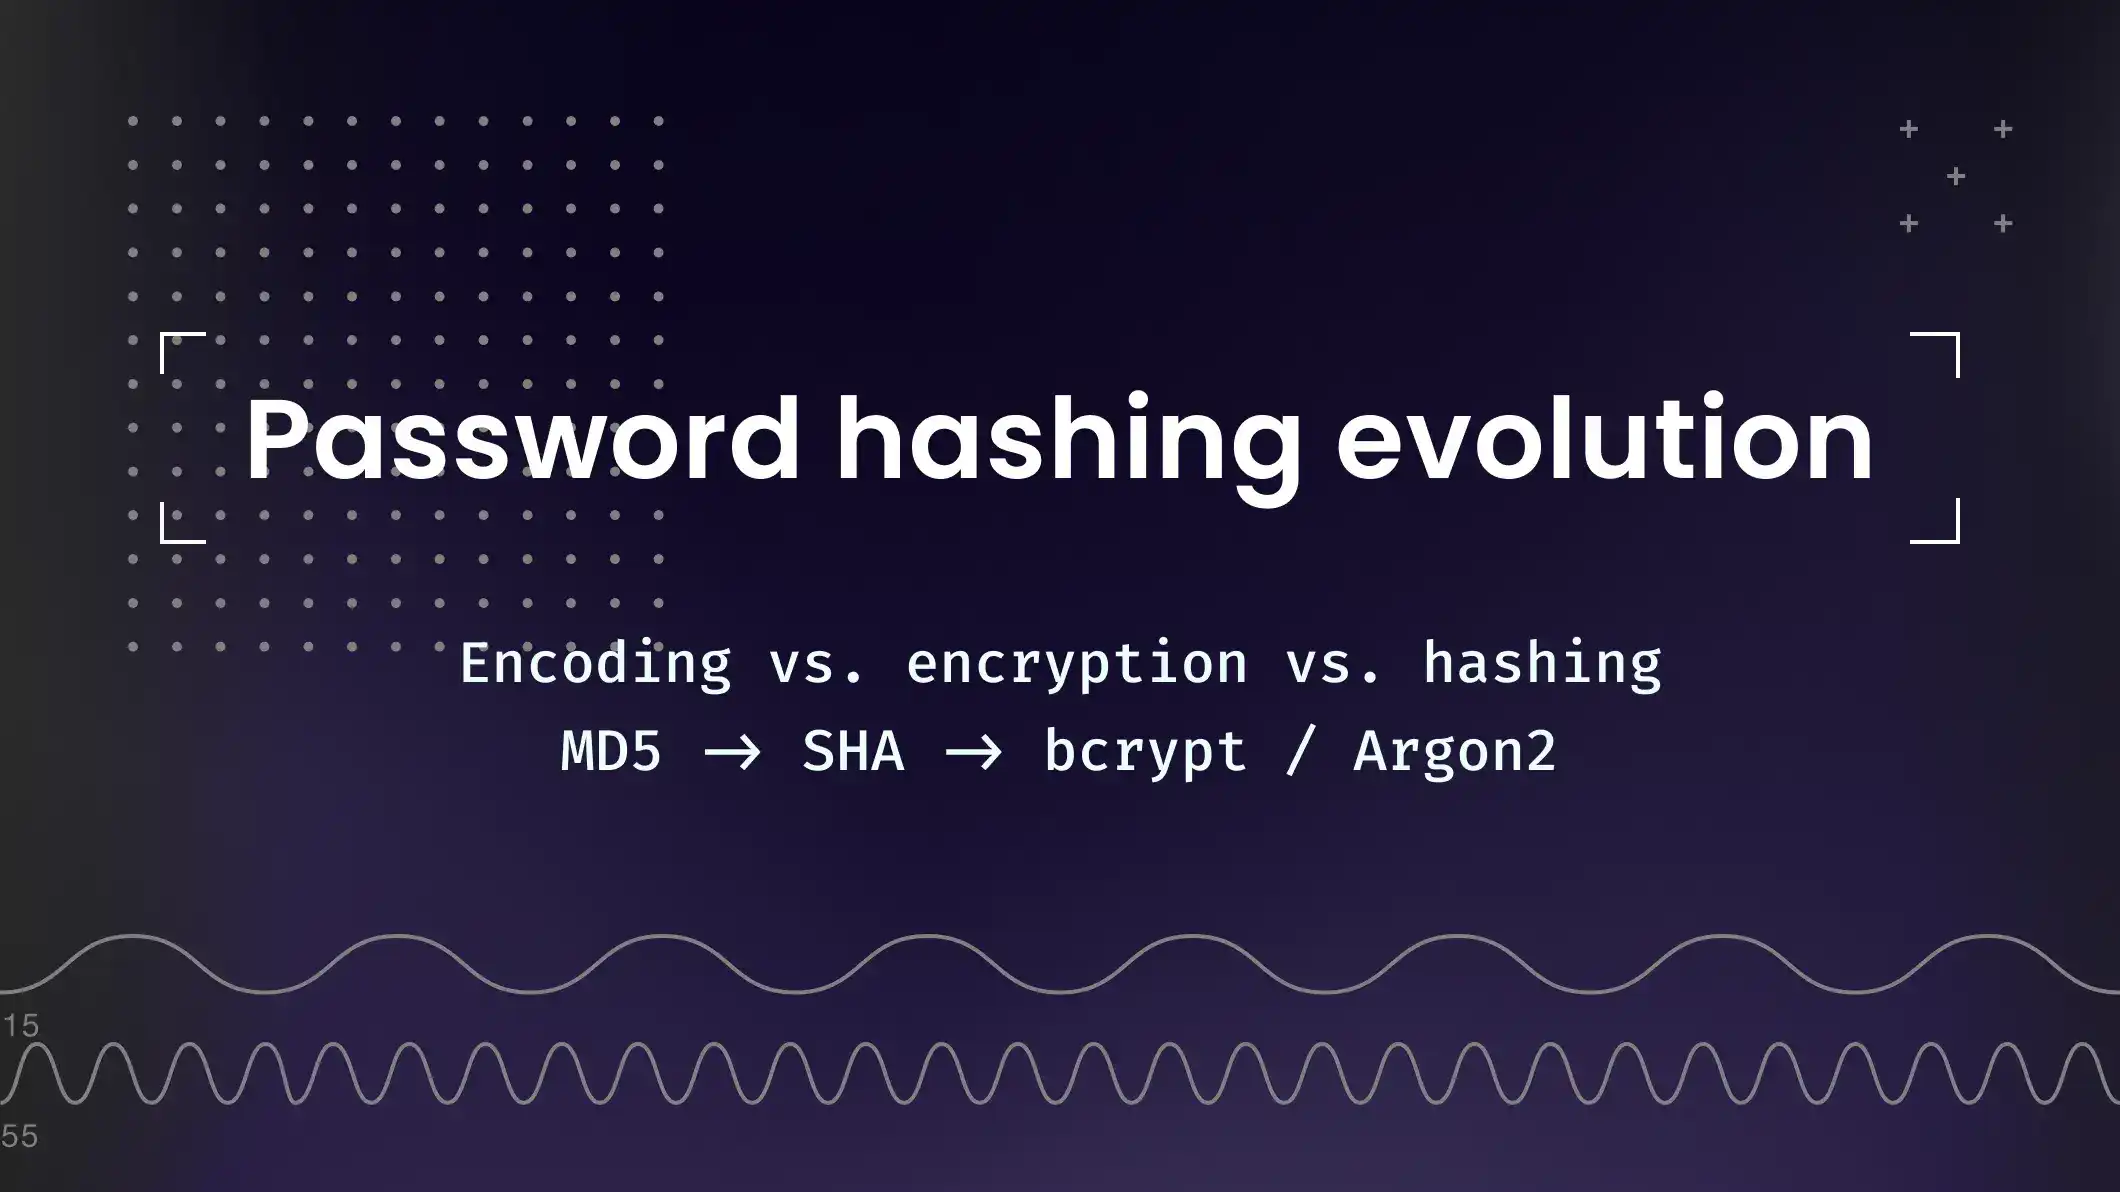 The evolution of password hashing